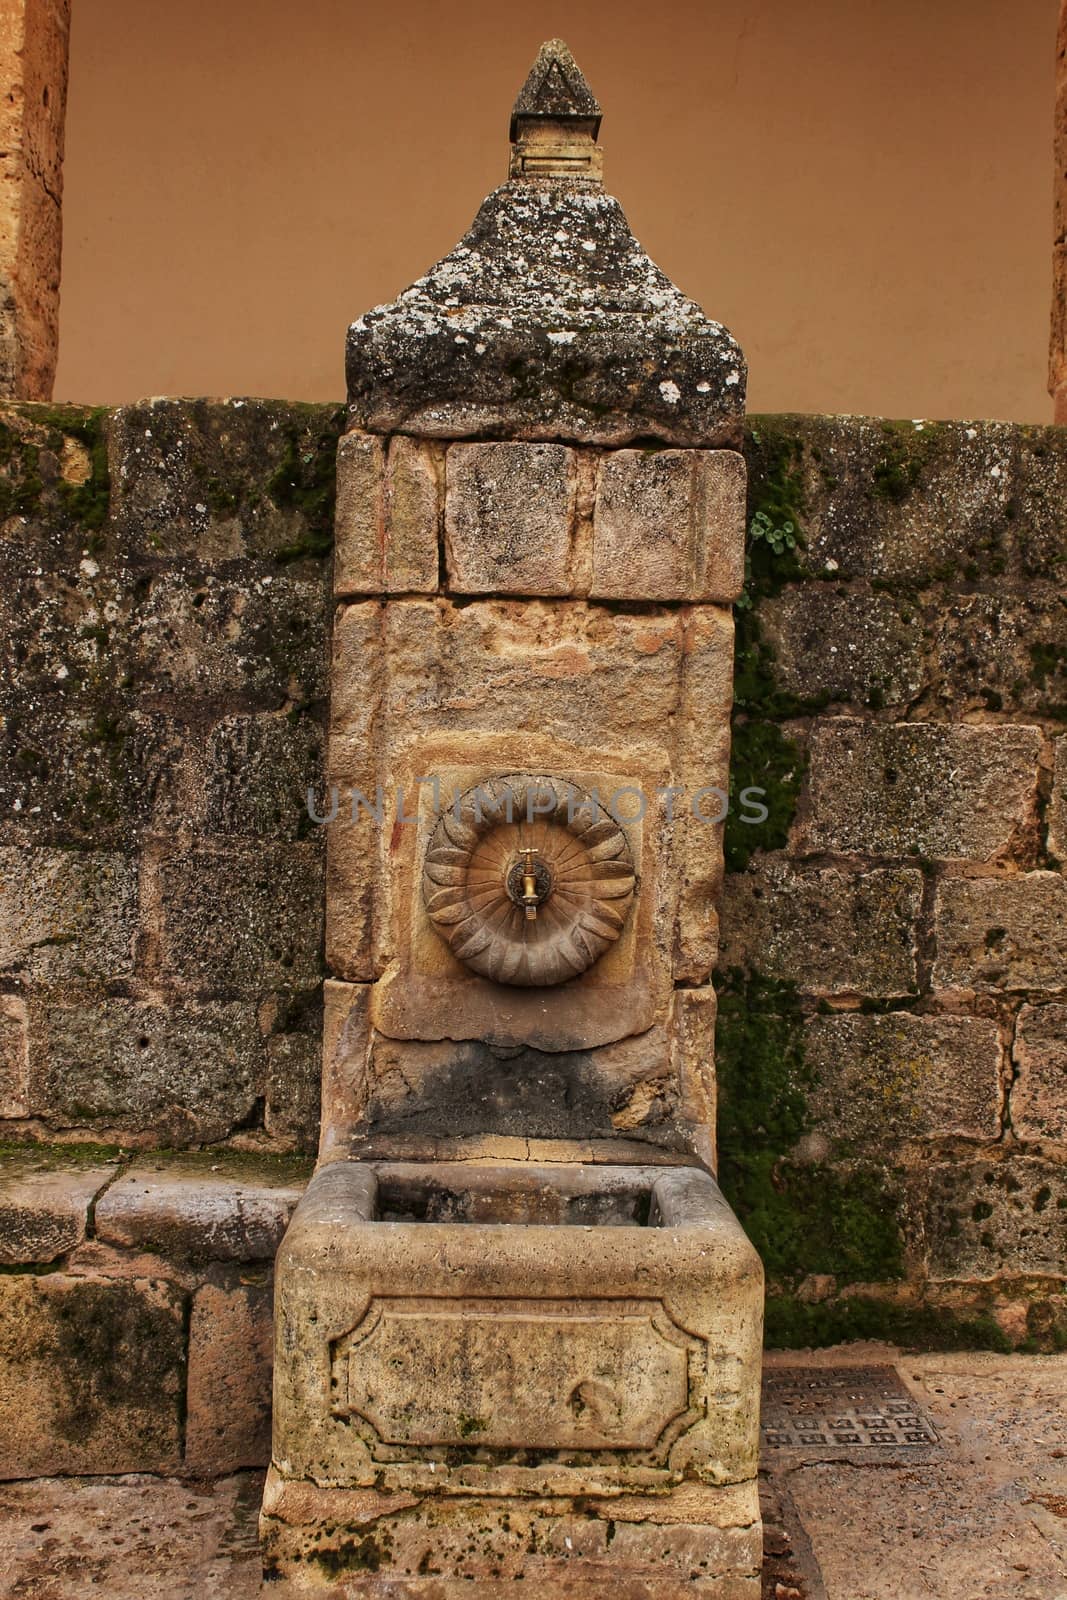 Old stone fountain in Plaza Mayor, Alcaraz by soniabonet